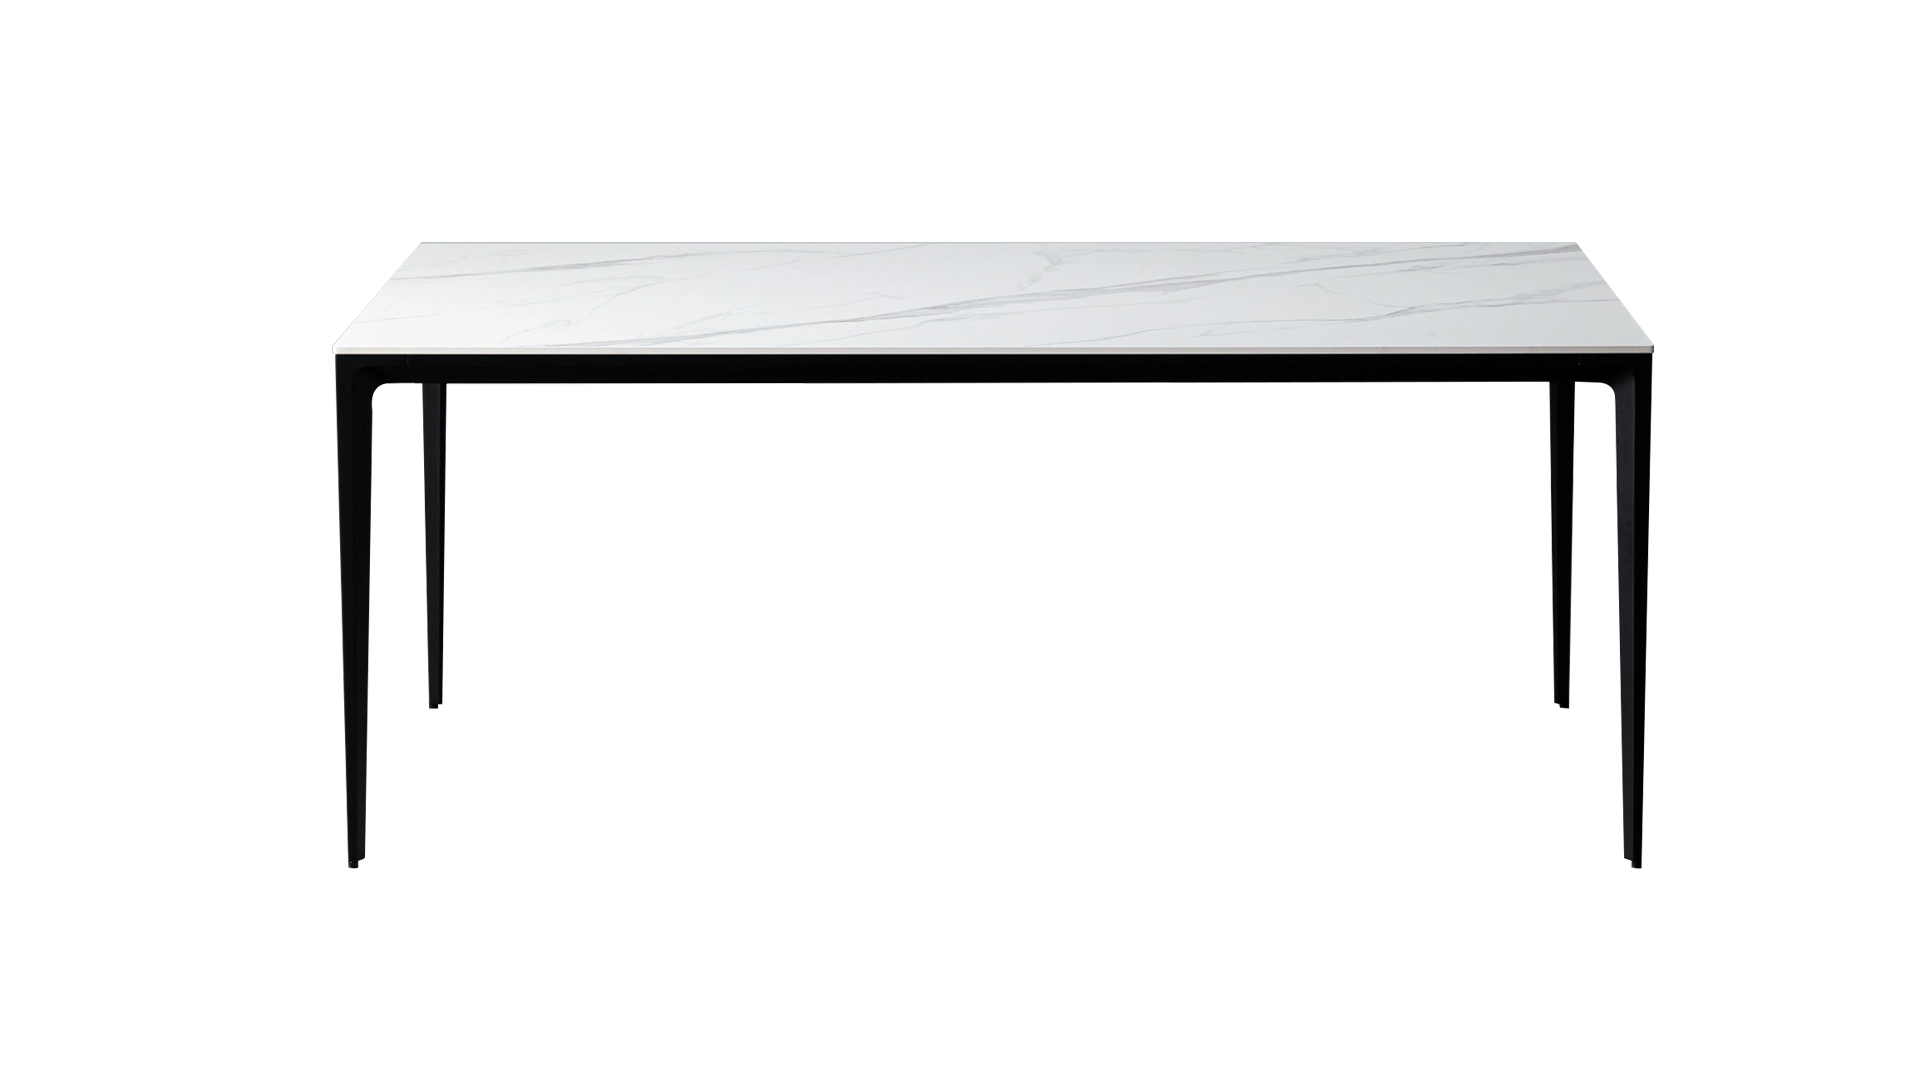 Innovation S moderni bijeli keramički stol za blagovanje Bk ciandre 1